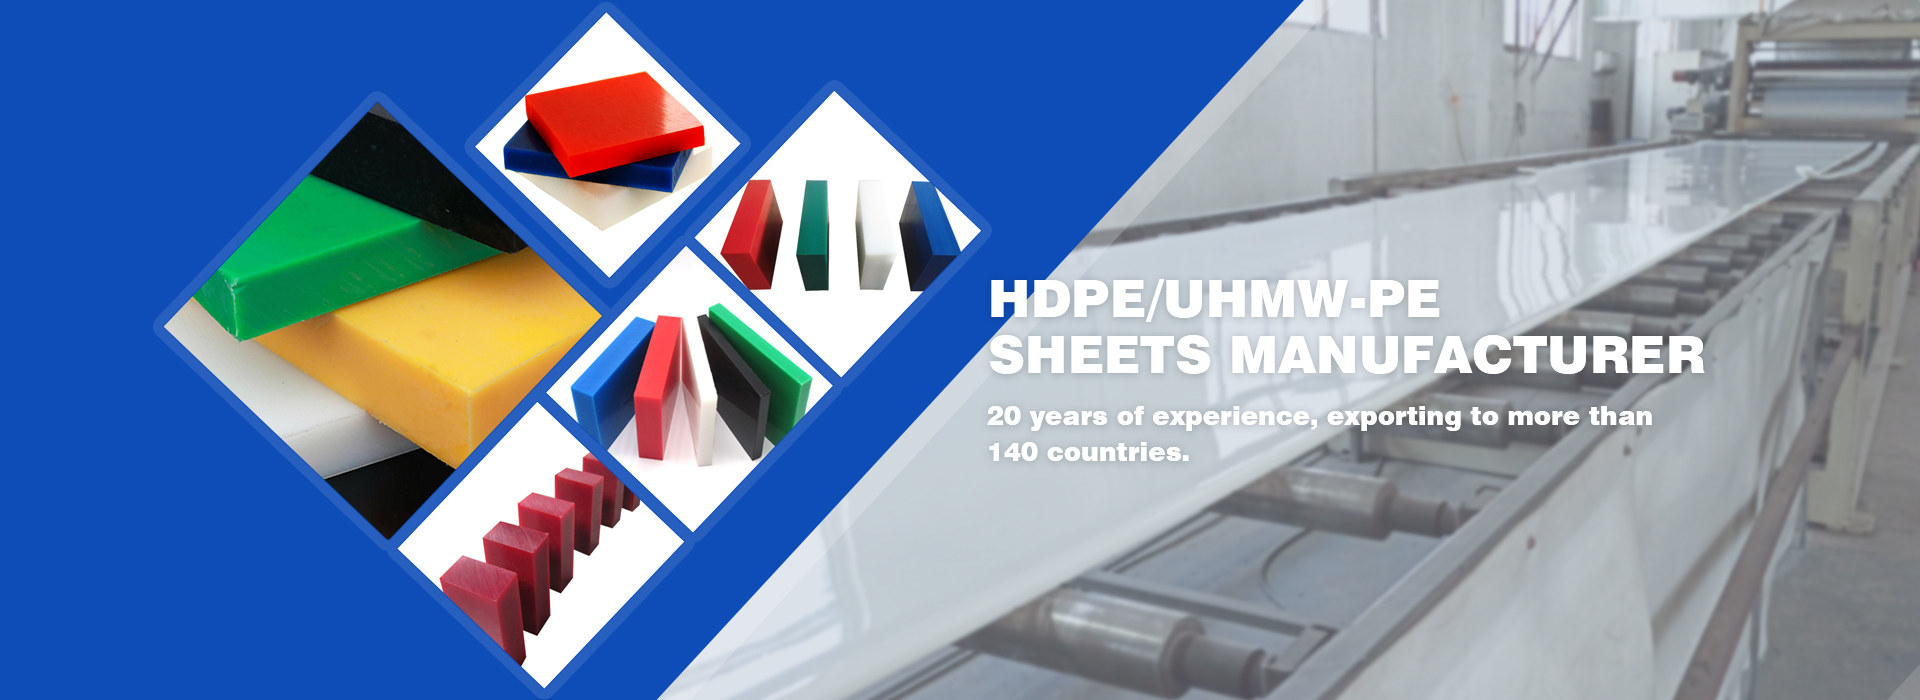 UHMWPE sheets